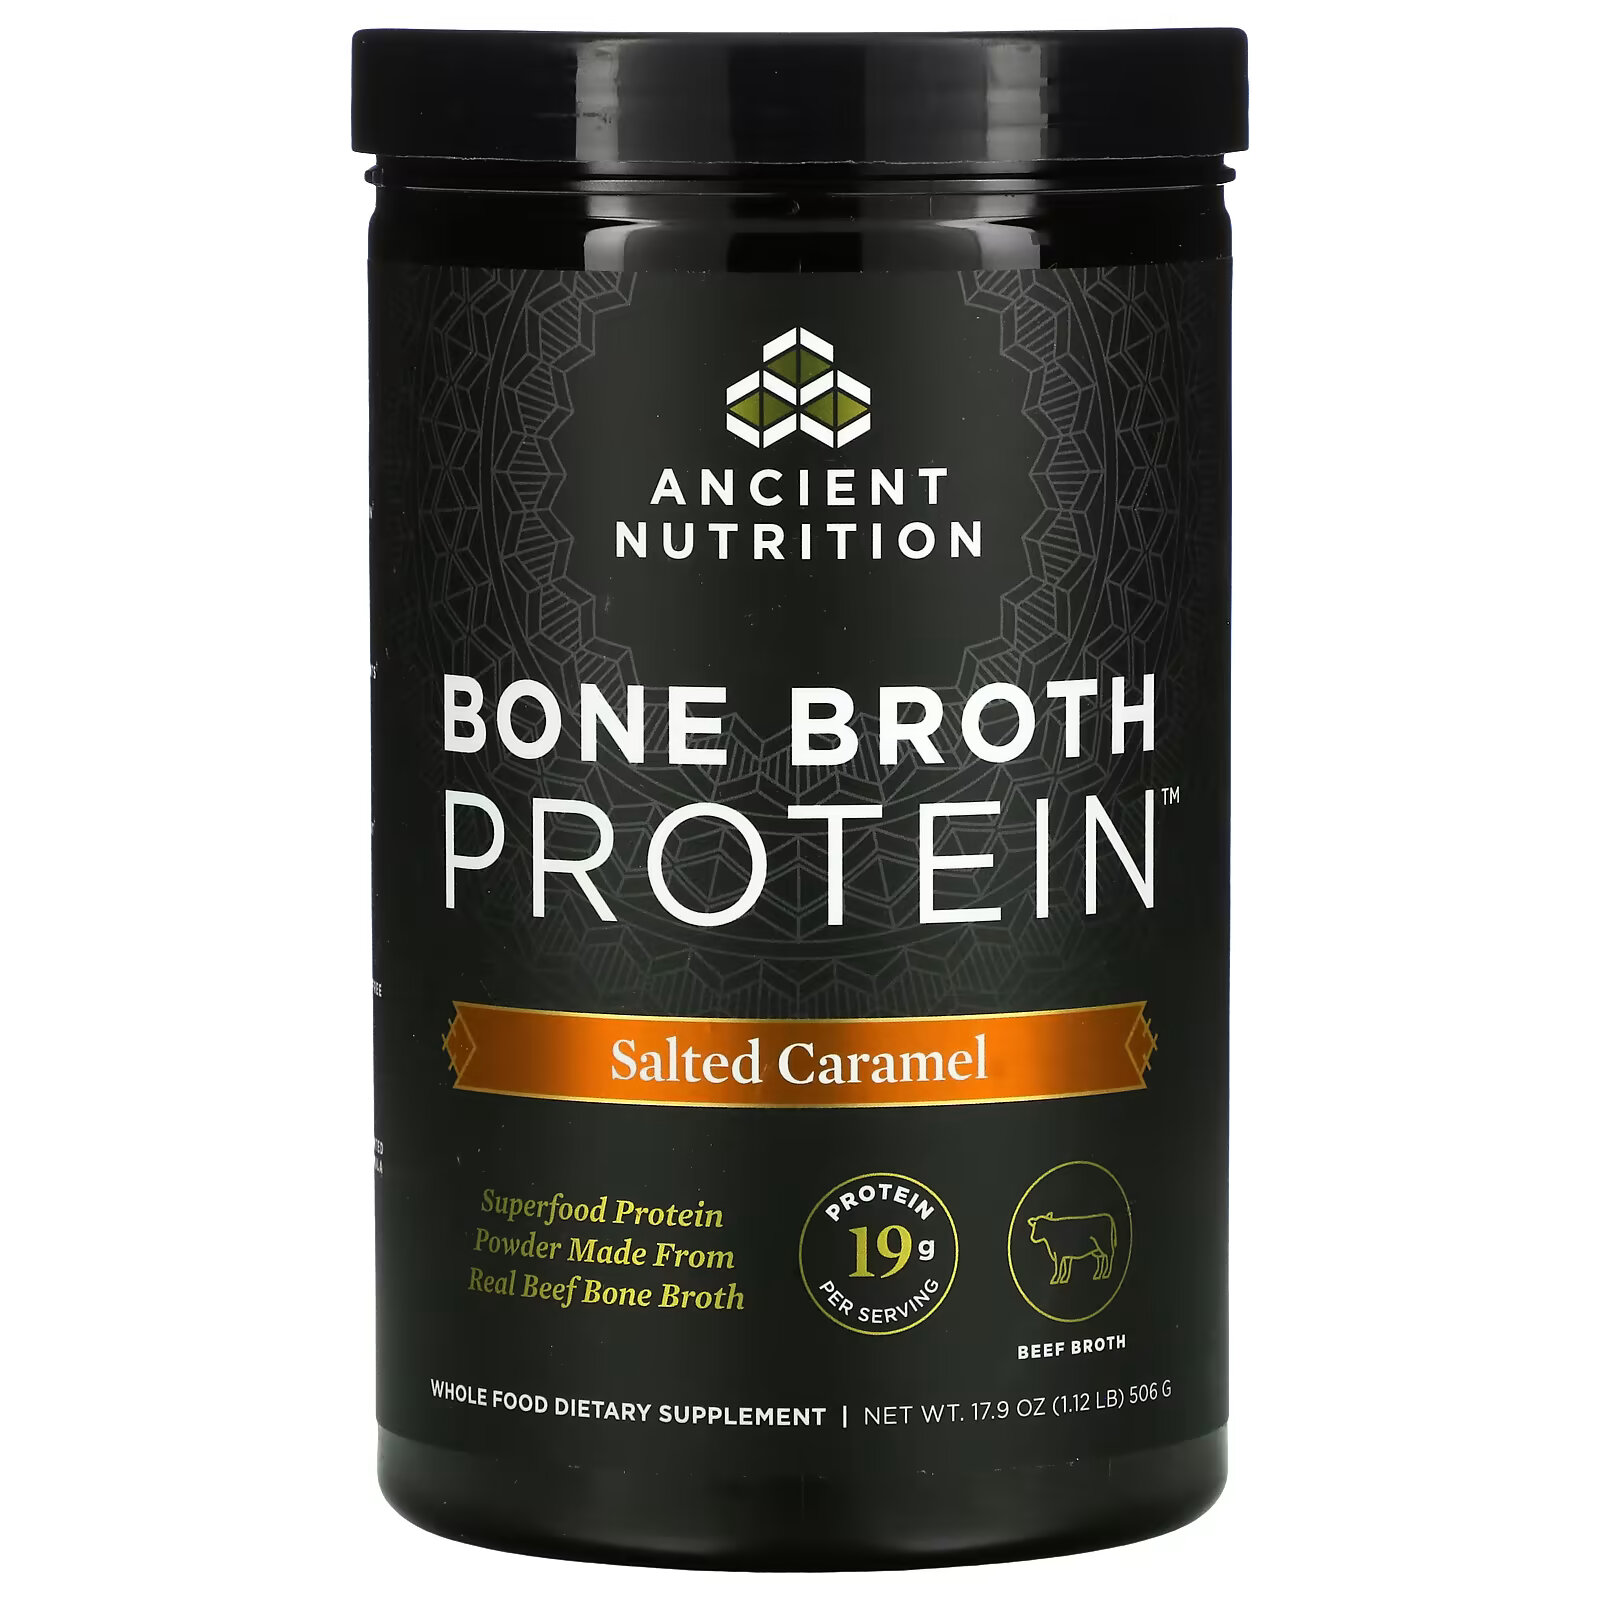 Dr. Axe / Ancient Nutrition, Bone Broth Protein, соленая карамель, 506 г (1,12 фунта) dr axe ancient nutrition bone broth protein salted caramel 1 18 lb 540 g